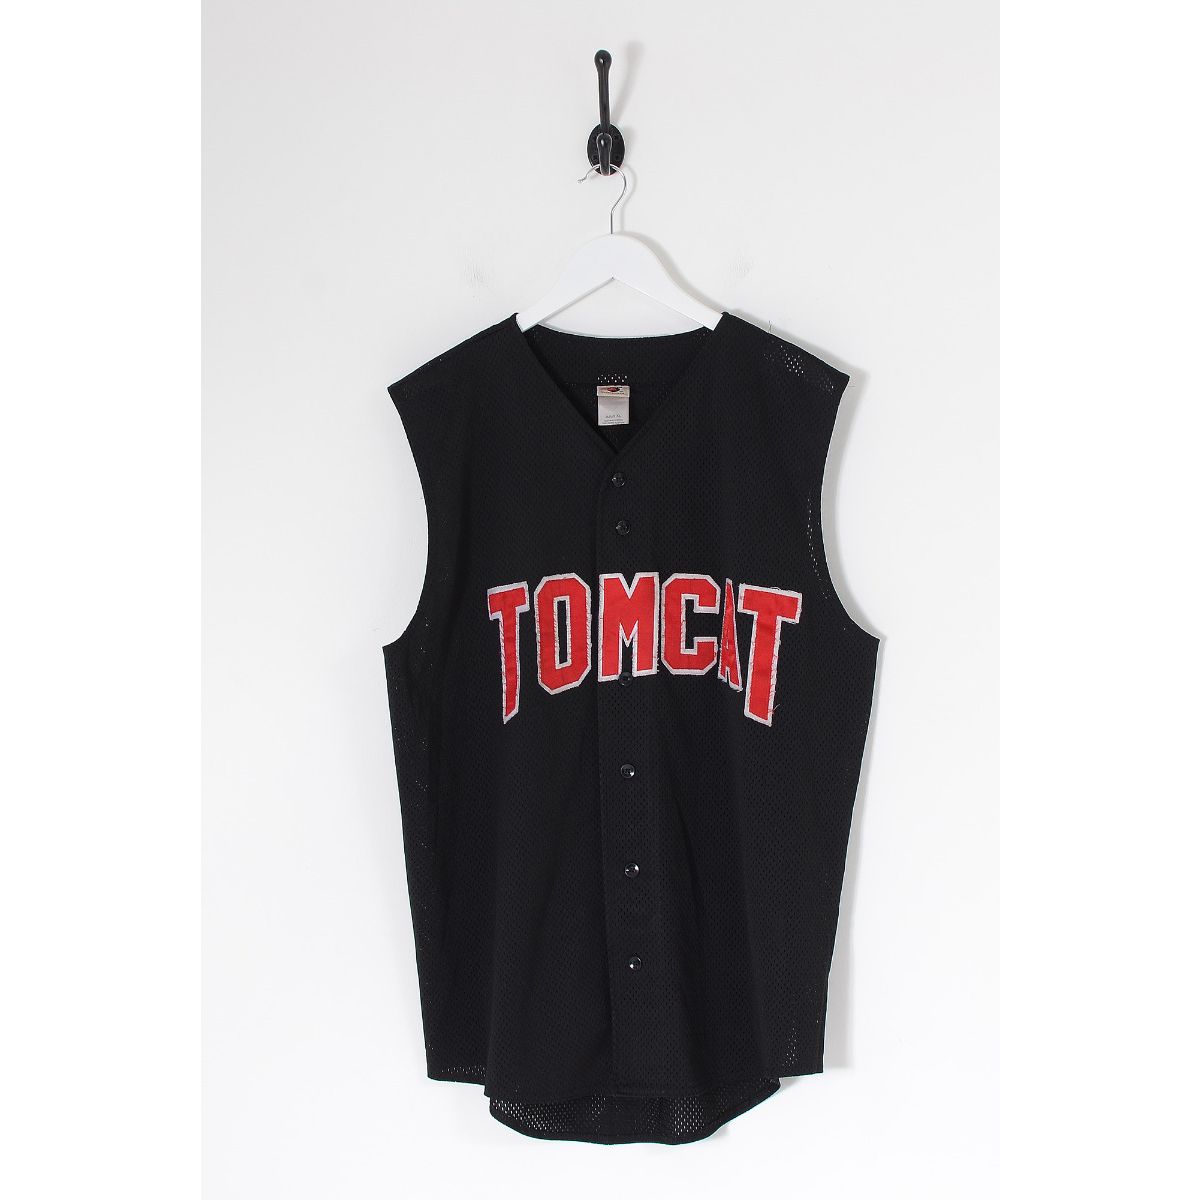 Vintage Tomcat Sleeveless Baseball Jersey Black XL